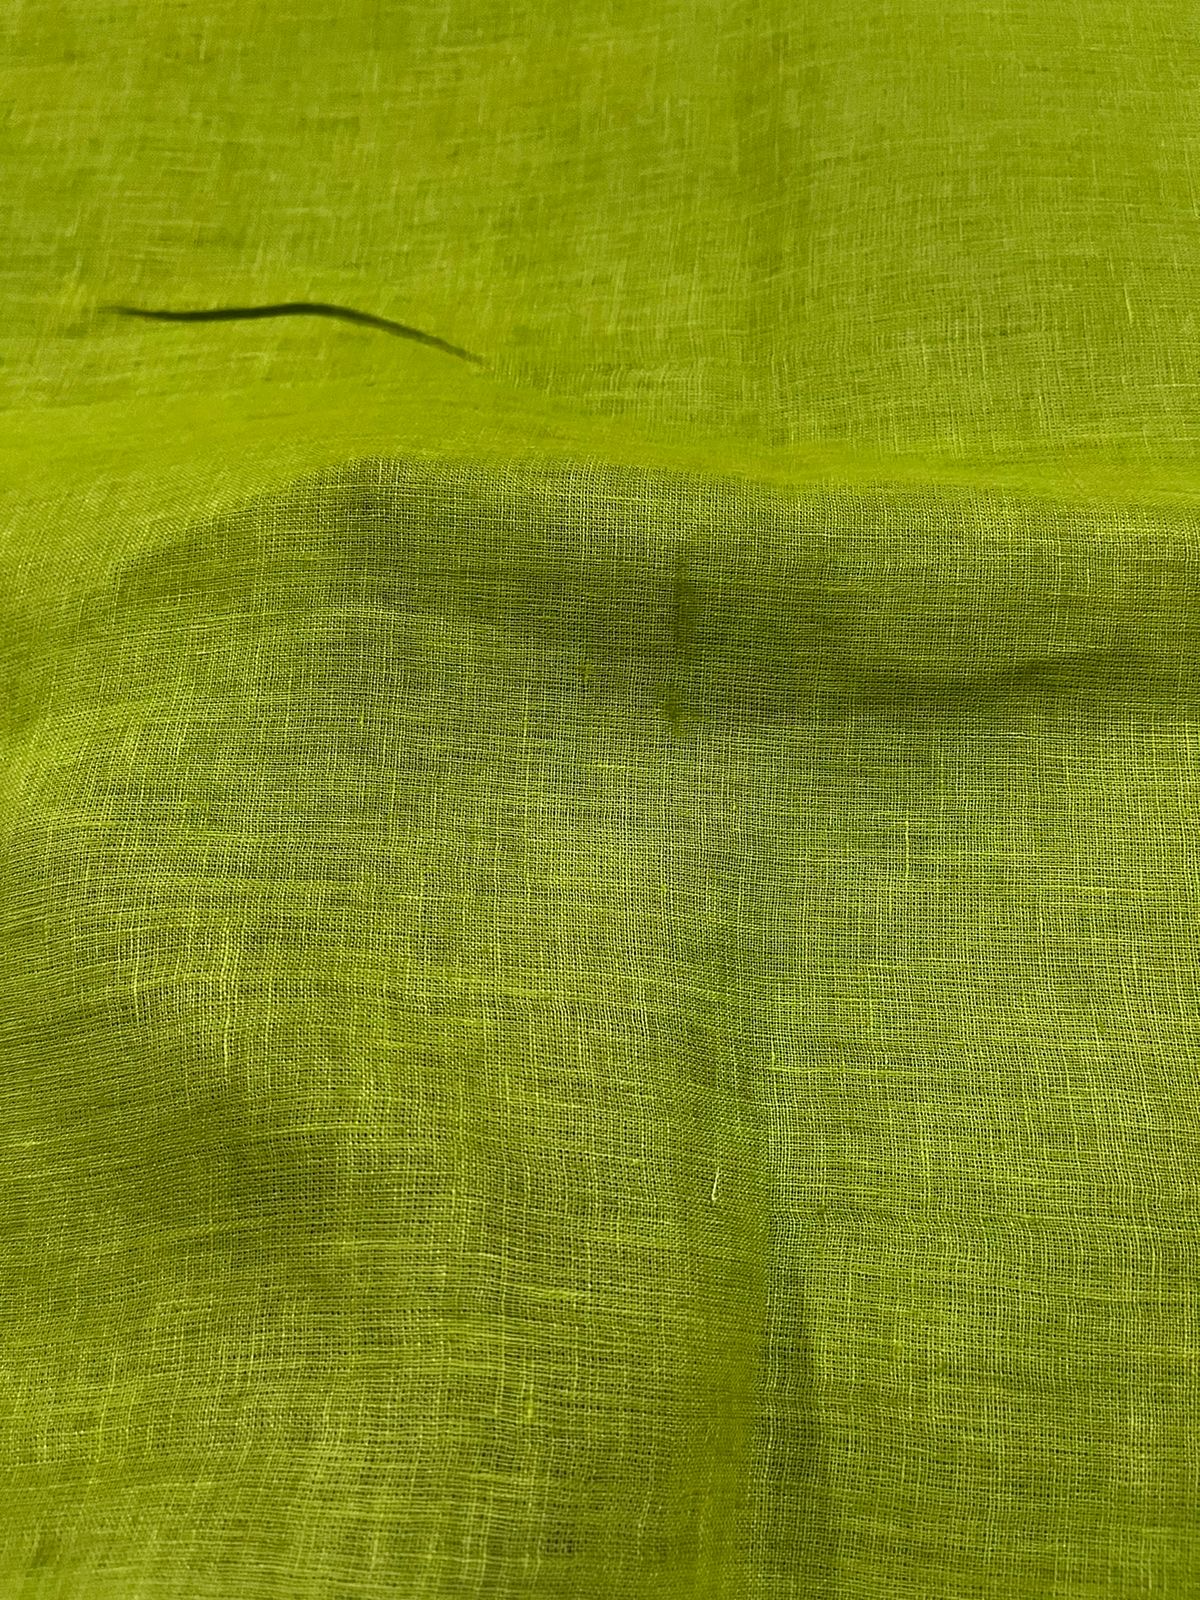 40 lea 58 inch 100% pure Handloom Linen Fabric - Bright Green